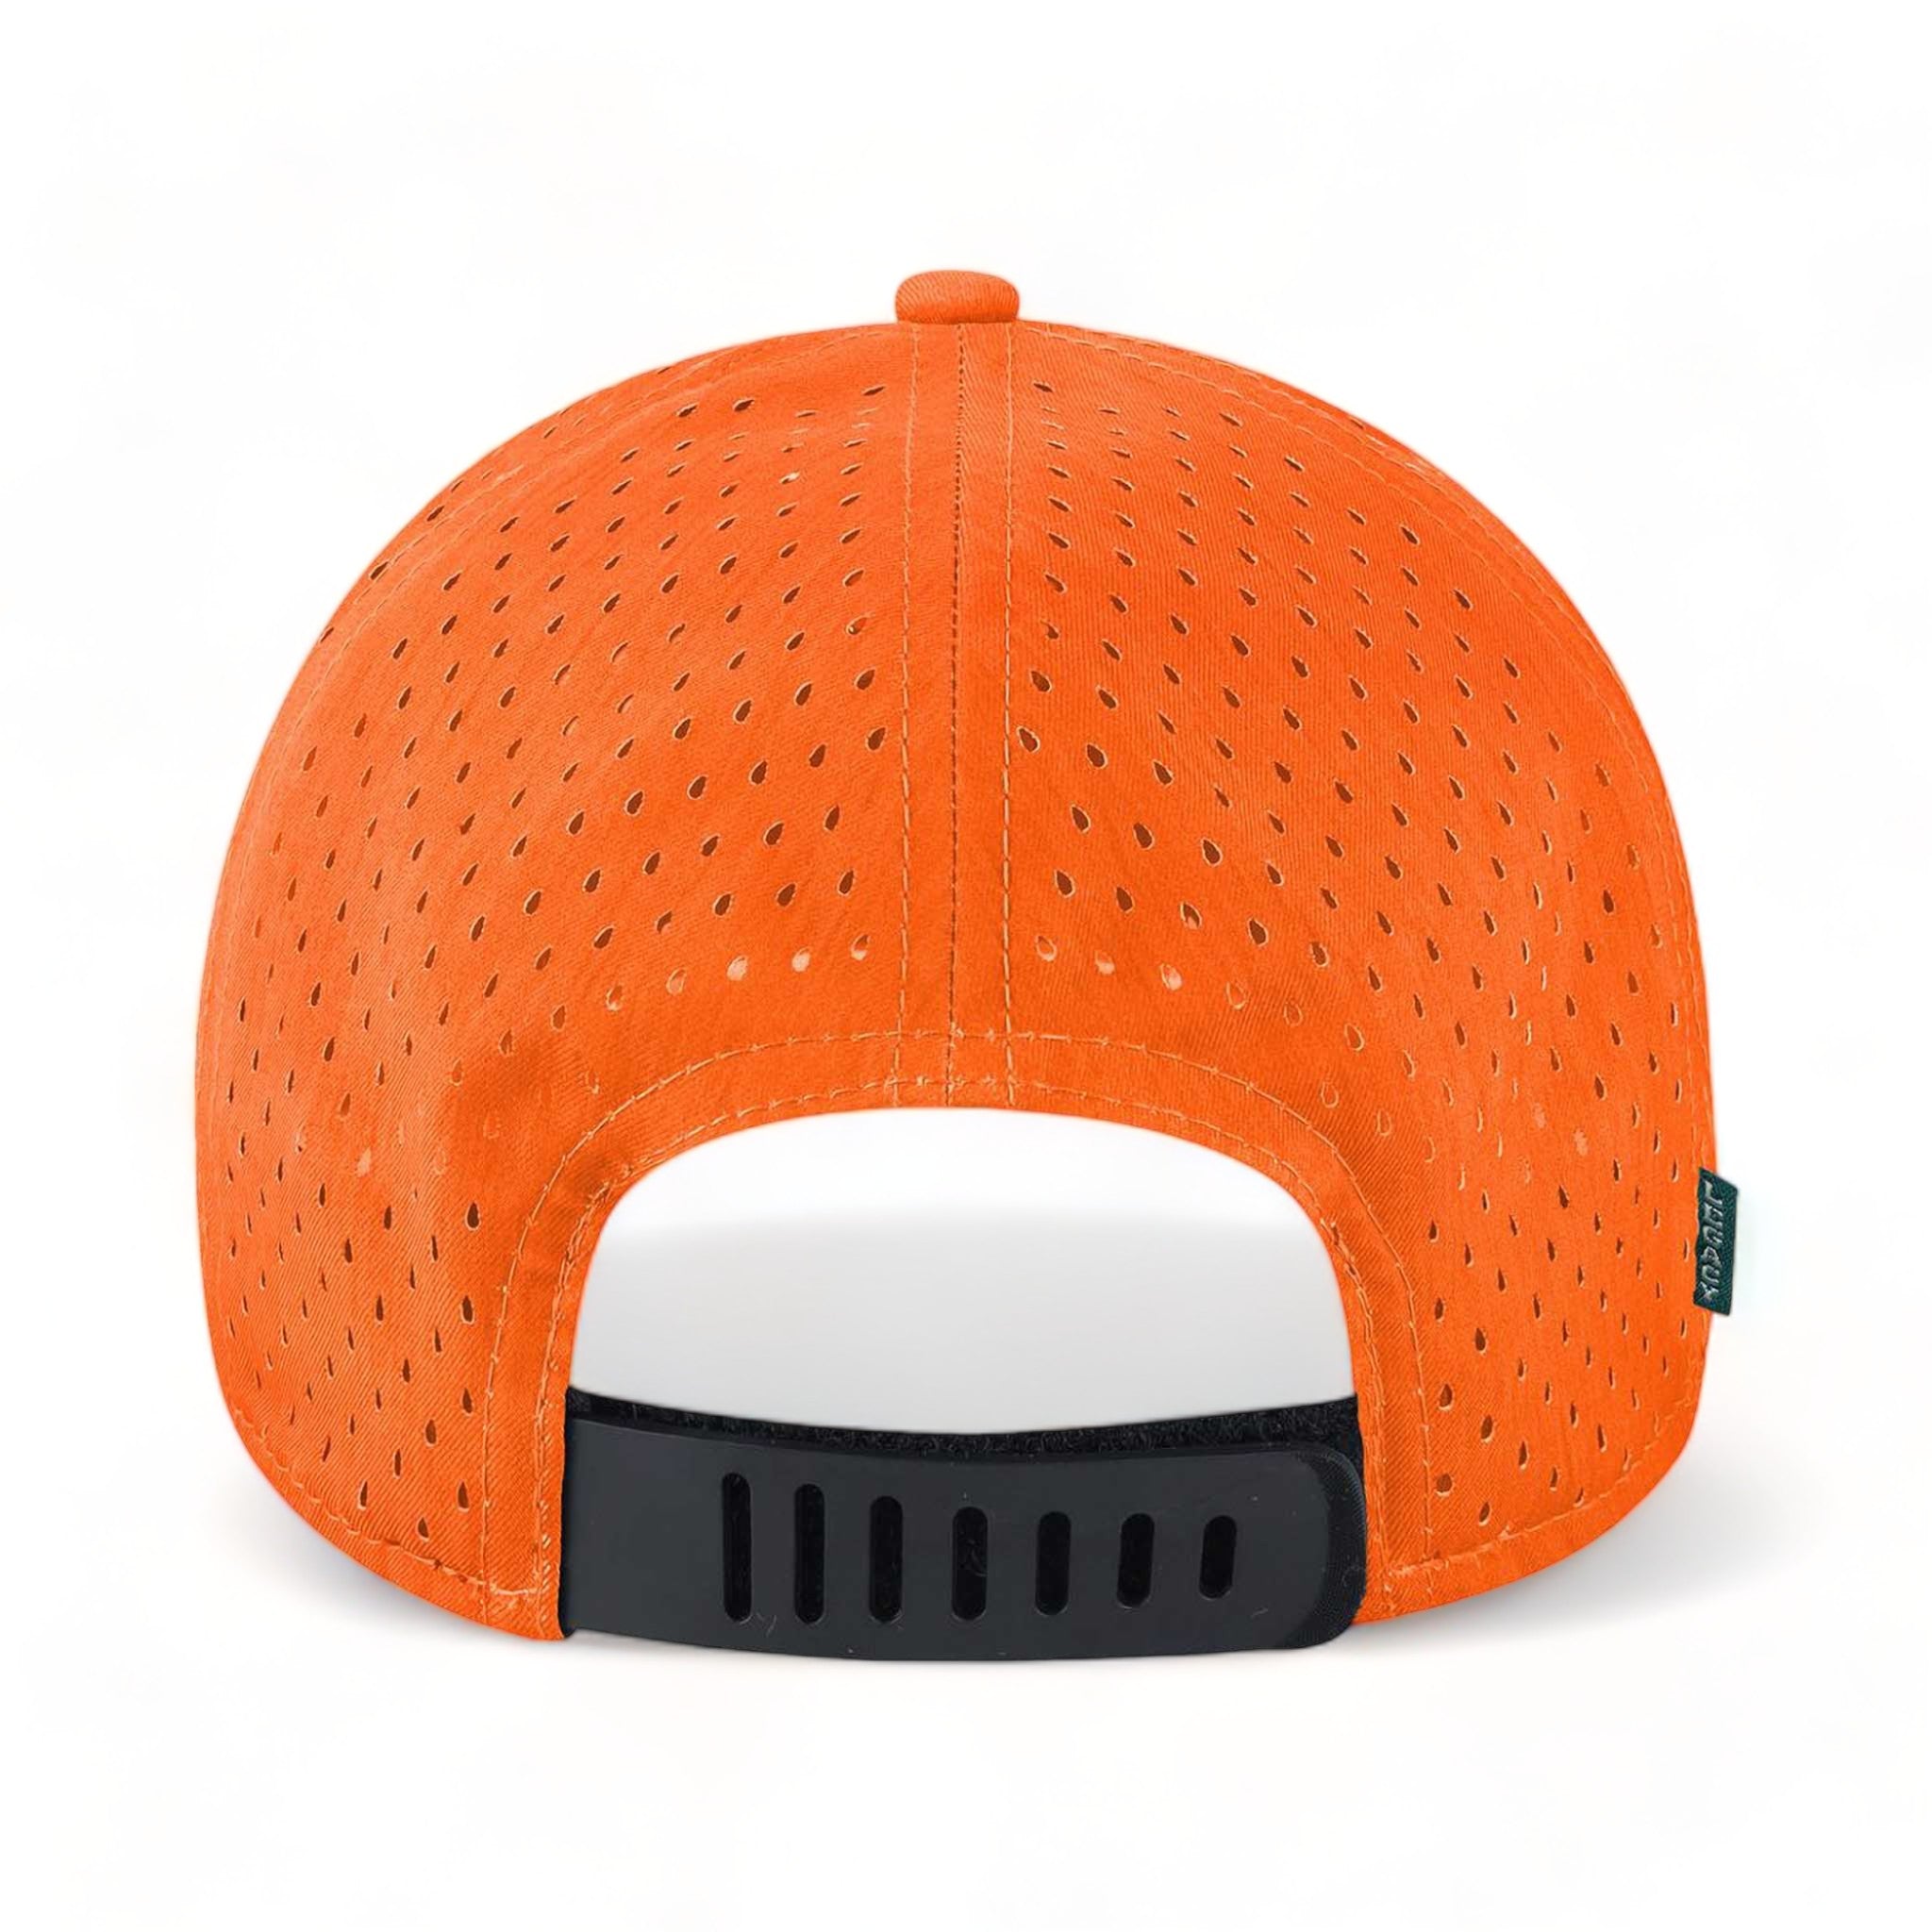 Back view of LEGACY REMPA custom hat in eco orange